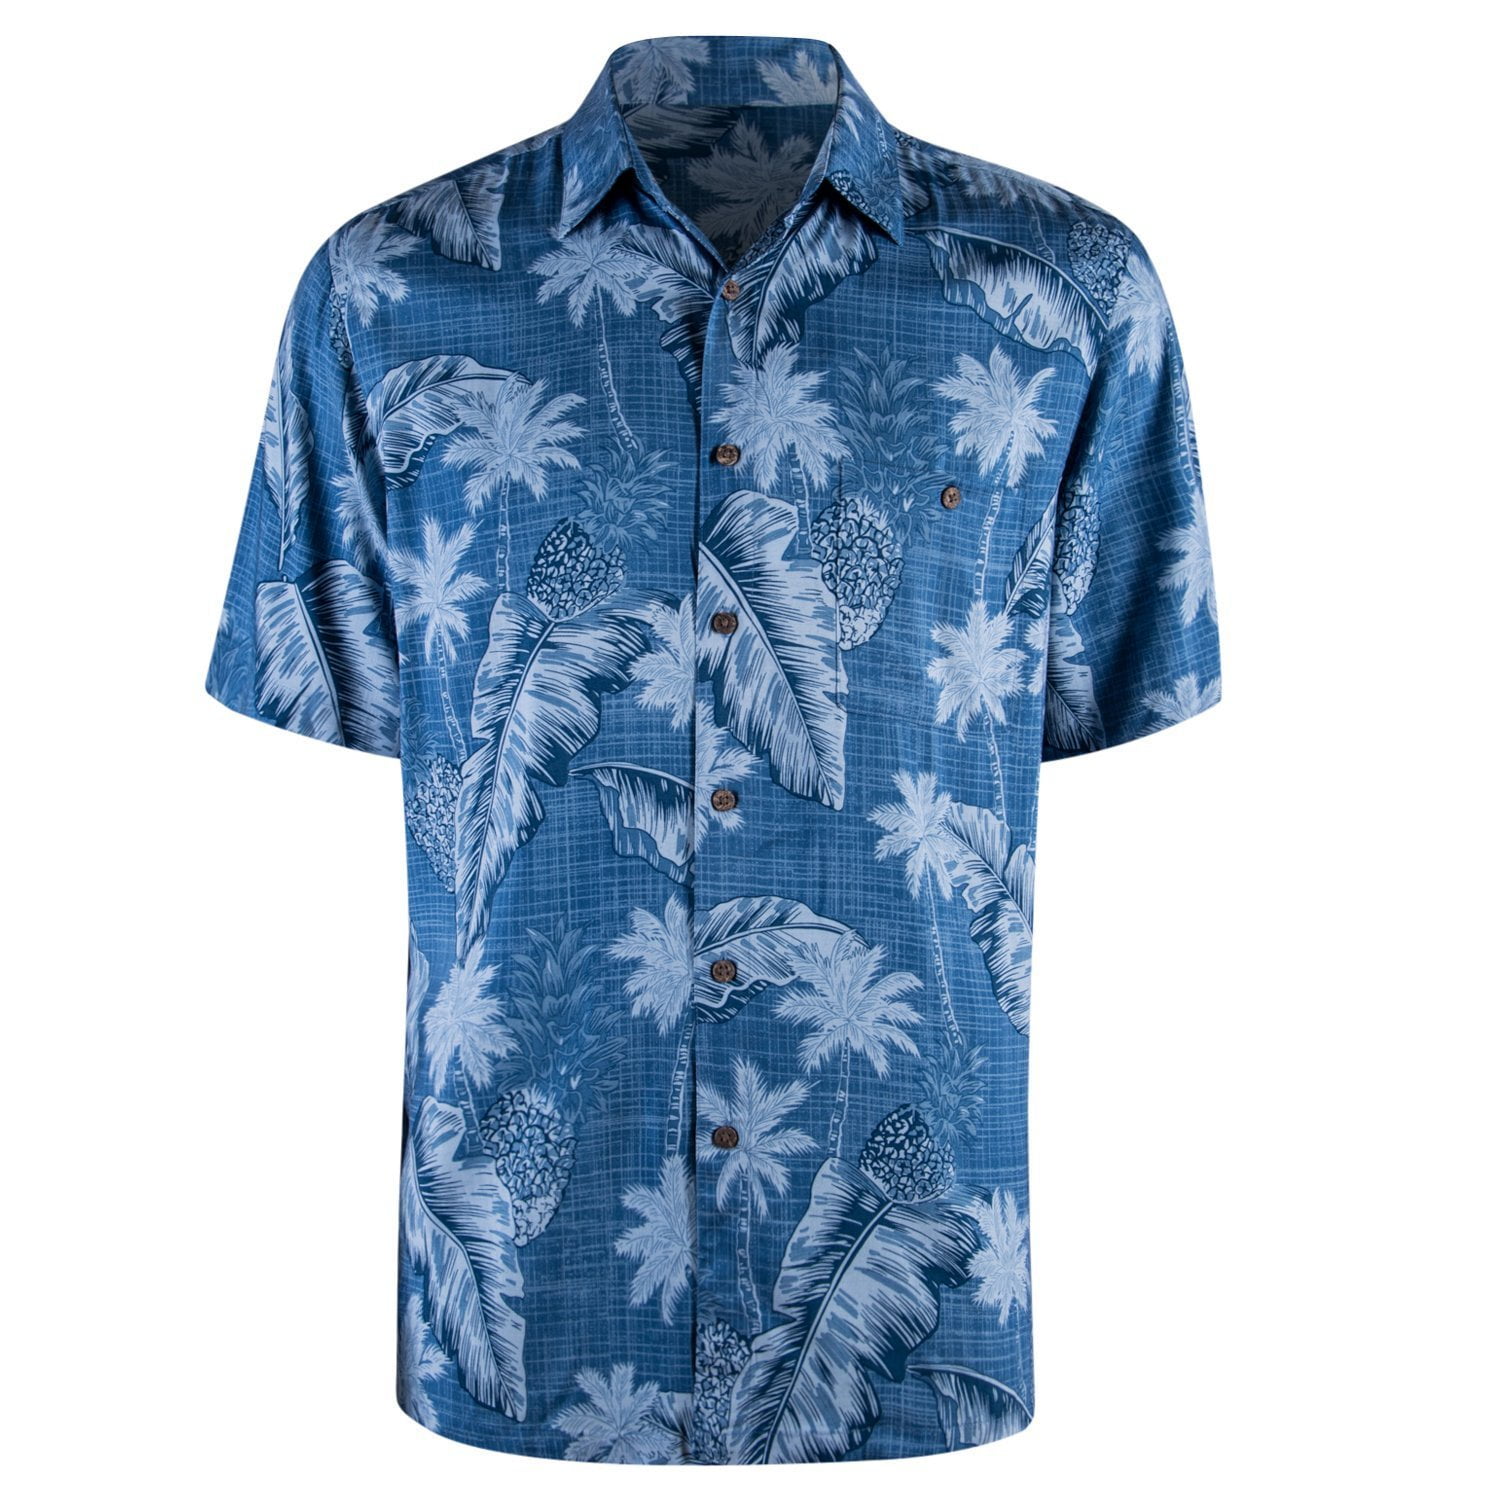 Campia Men's Rayon Print Shirt (Marine 17, M) - Walmart.com